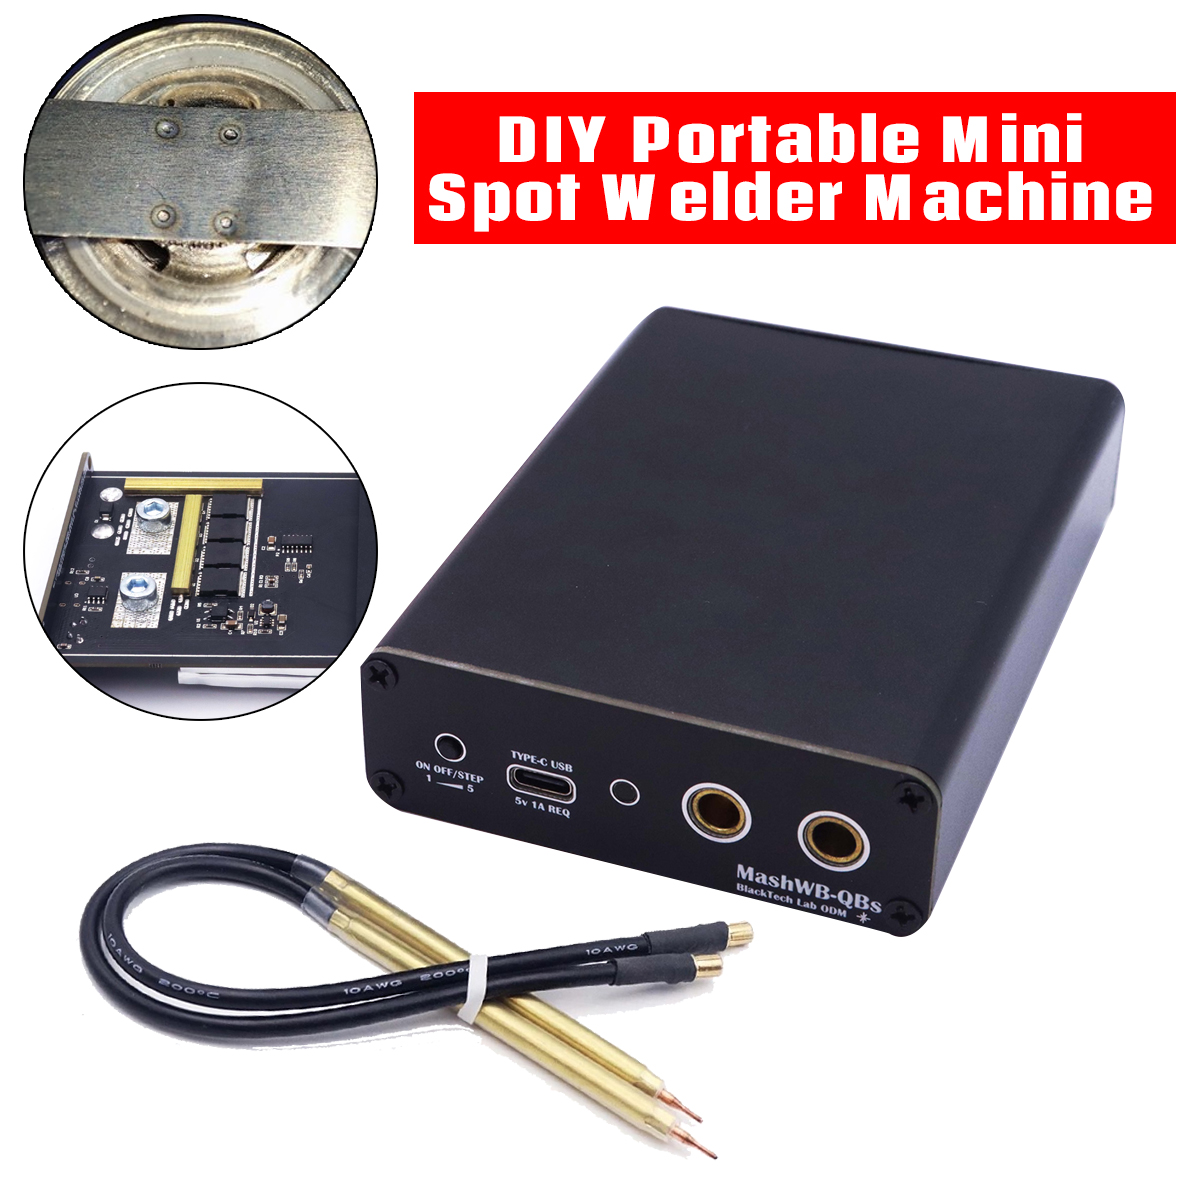 DIY-Portable-Mini-Spot-Welder-Machine-Power-with-Welding-Pen-for-18650-Battery-1836062-1